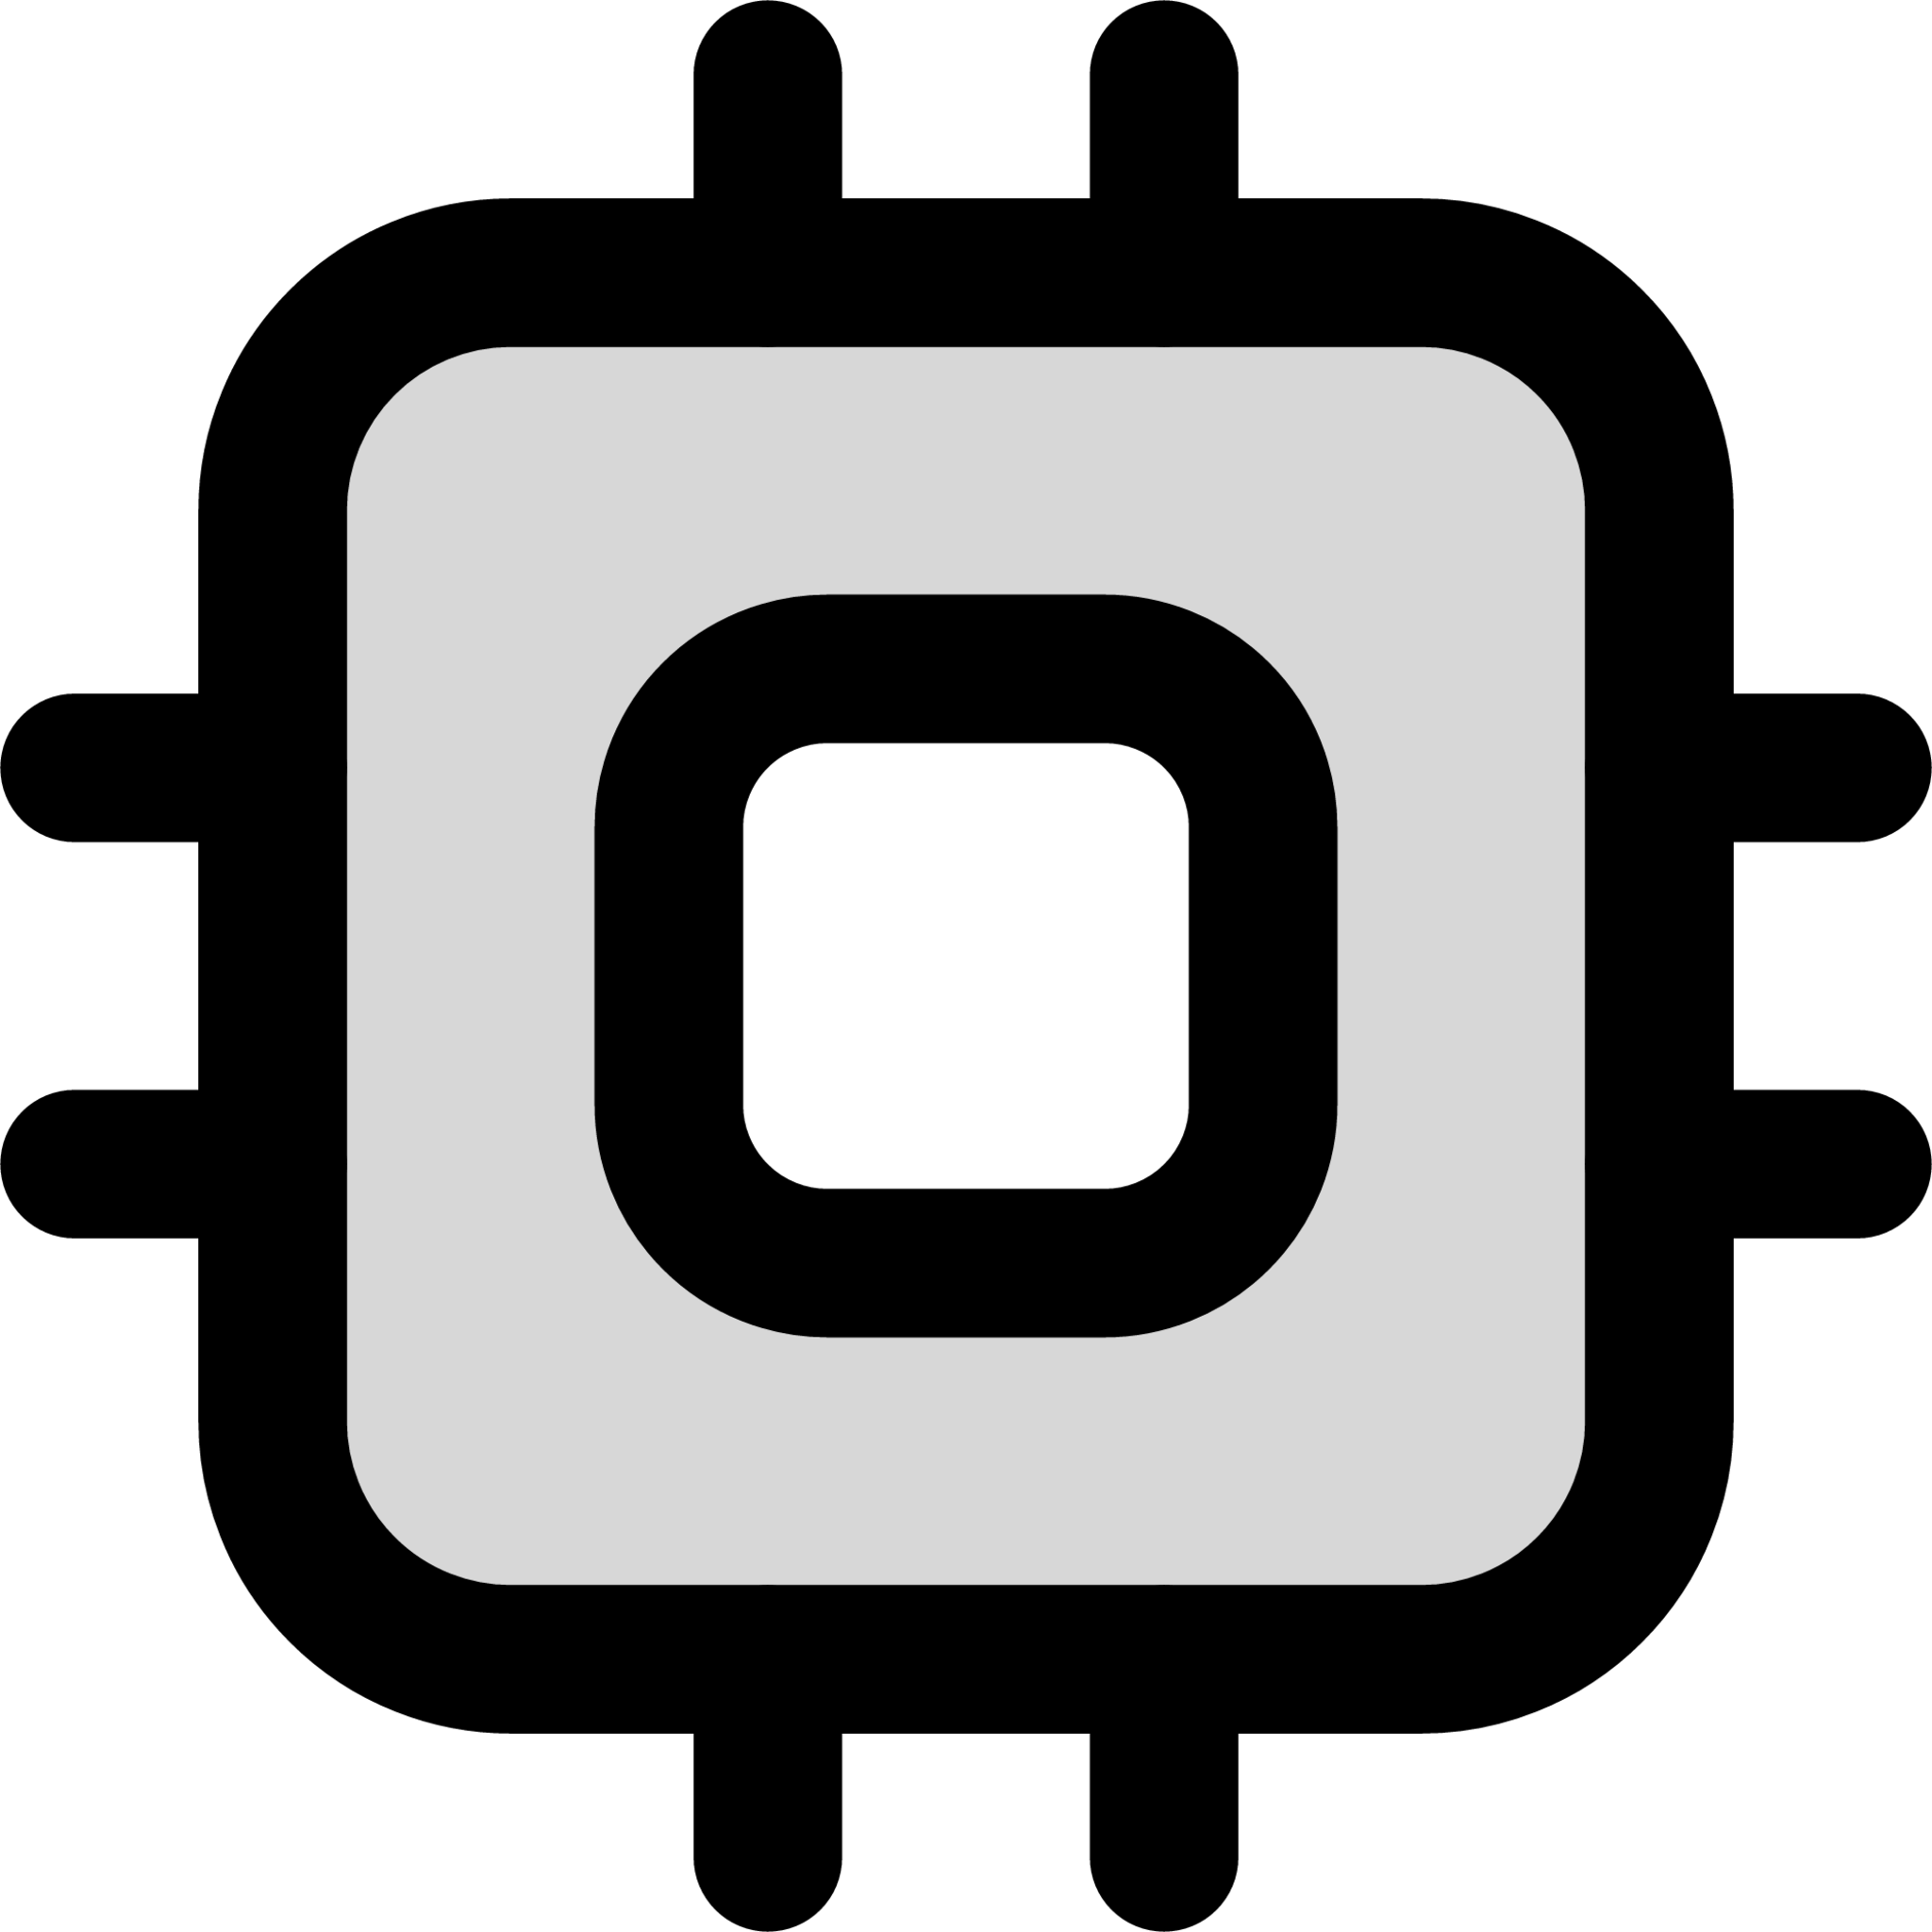 Memory (duotone) icon